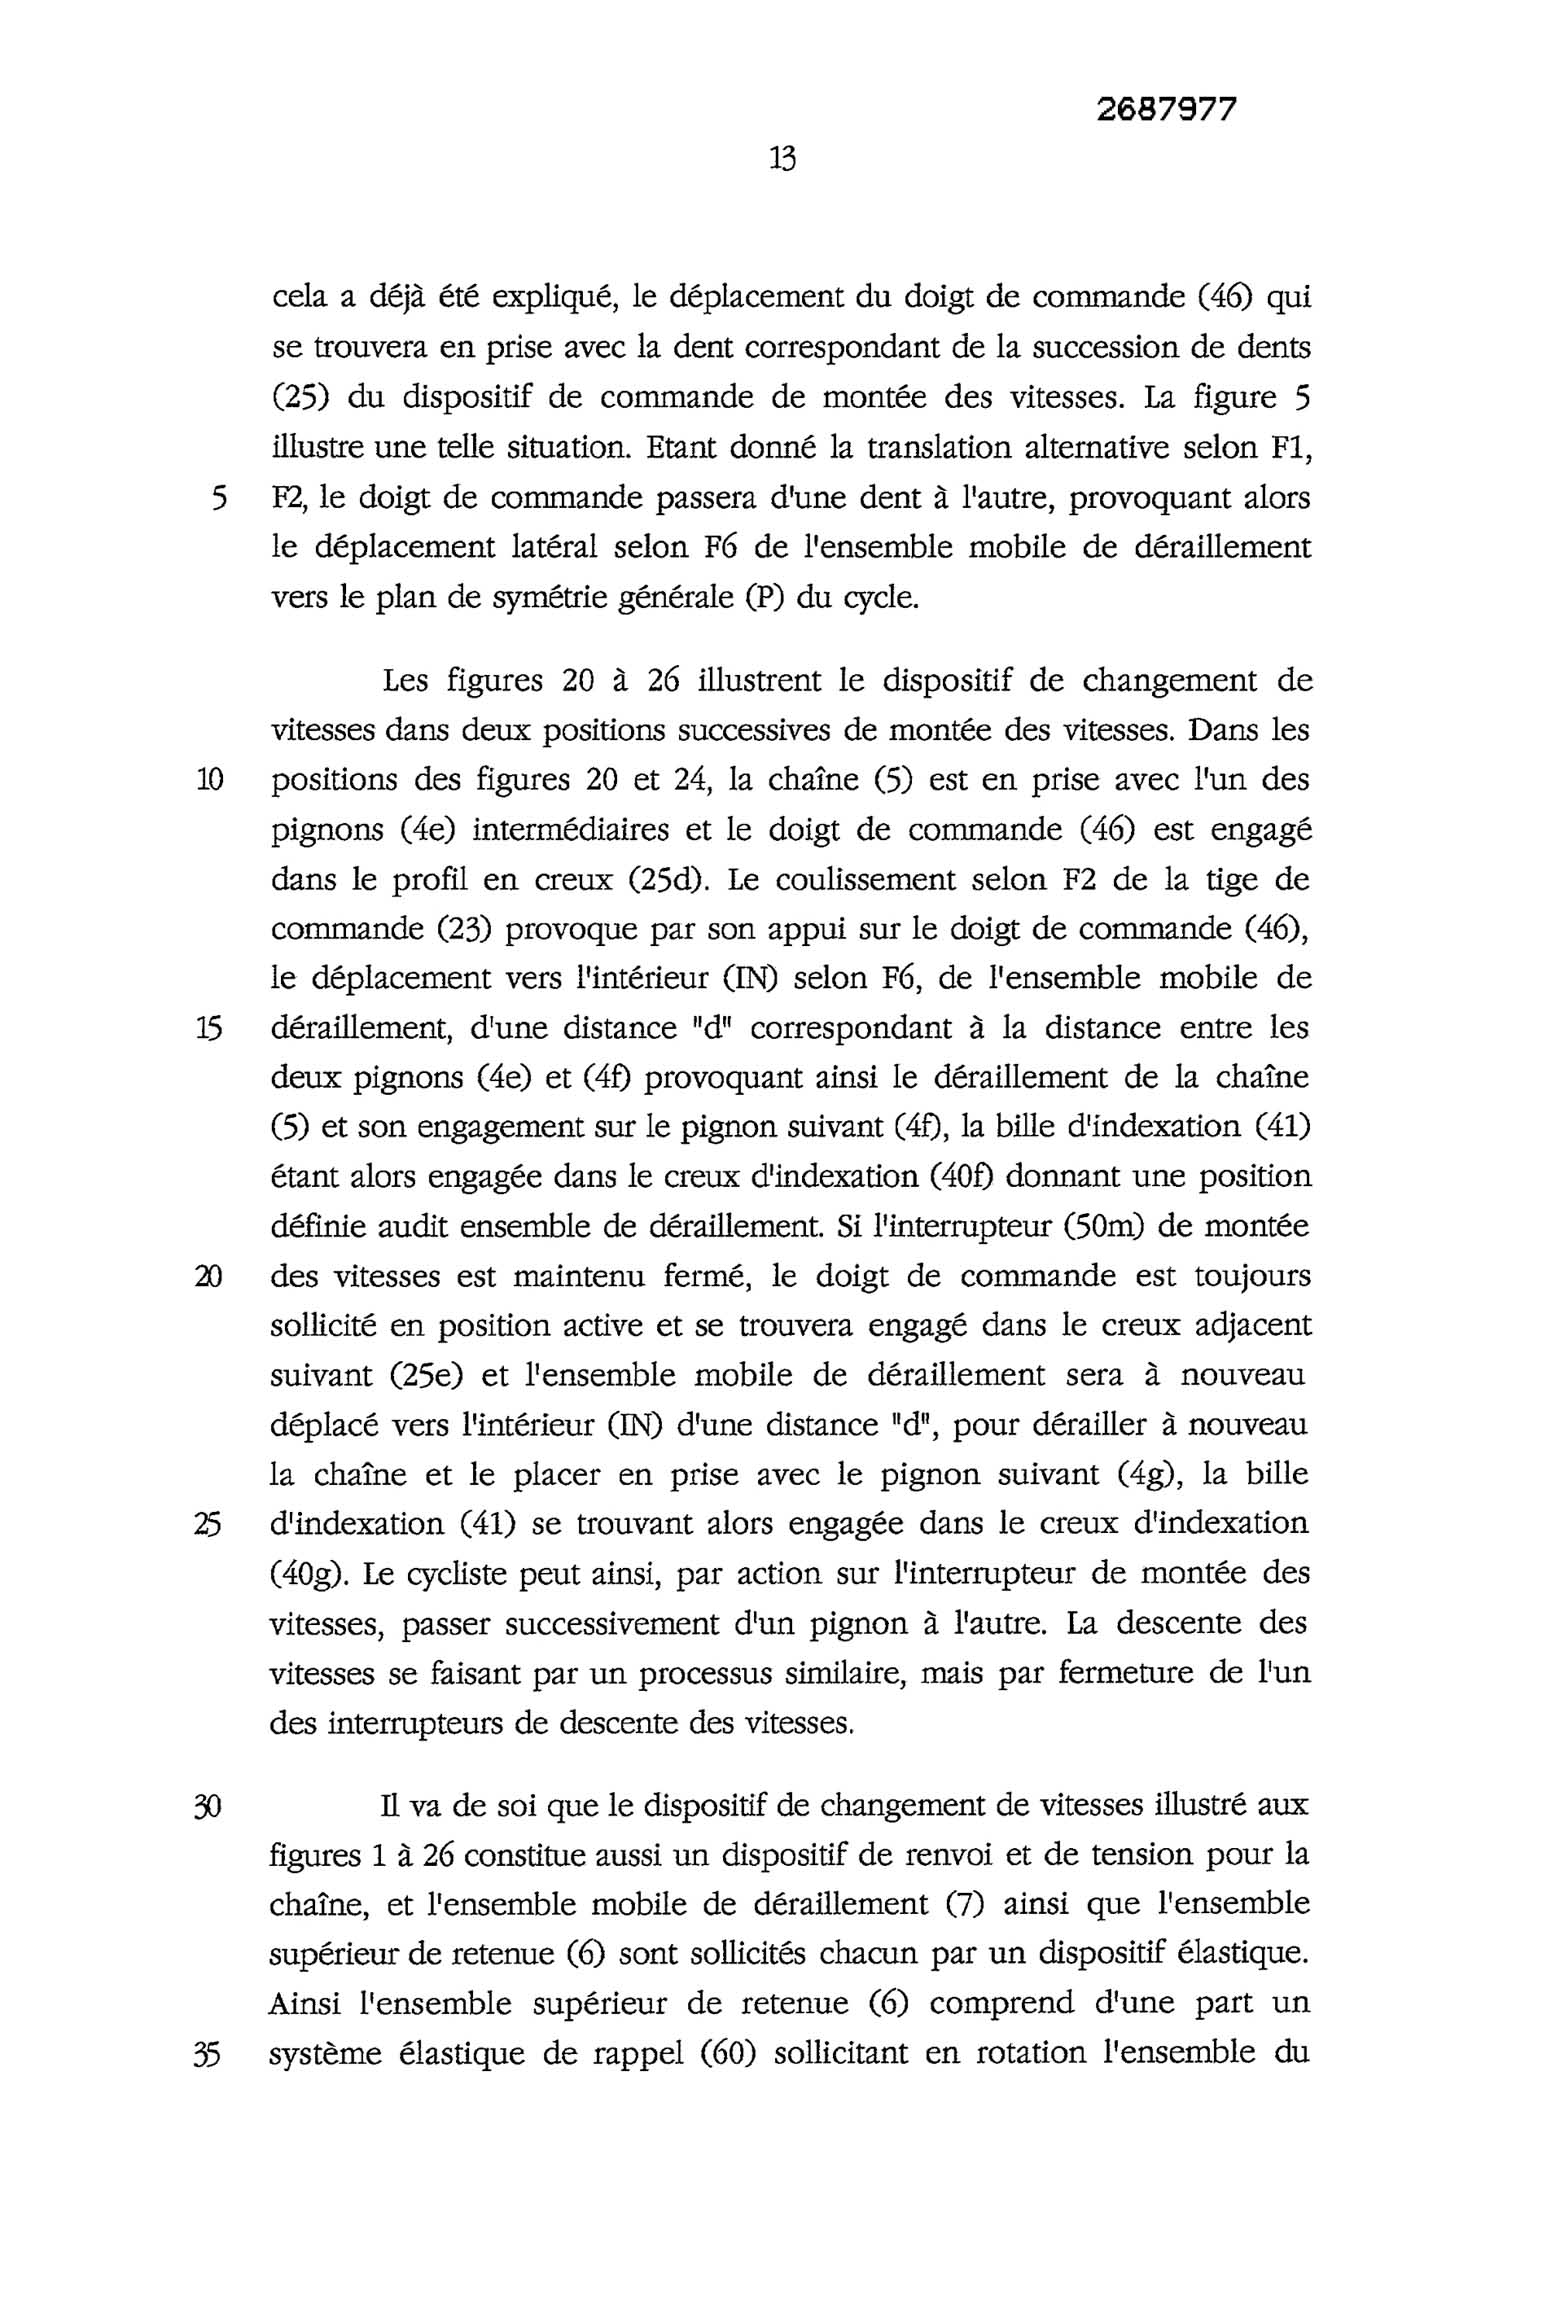 French Patent 2,687,977 - MAVIC scan 14 main image